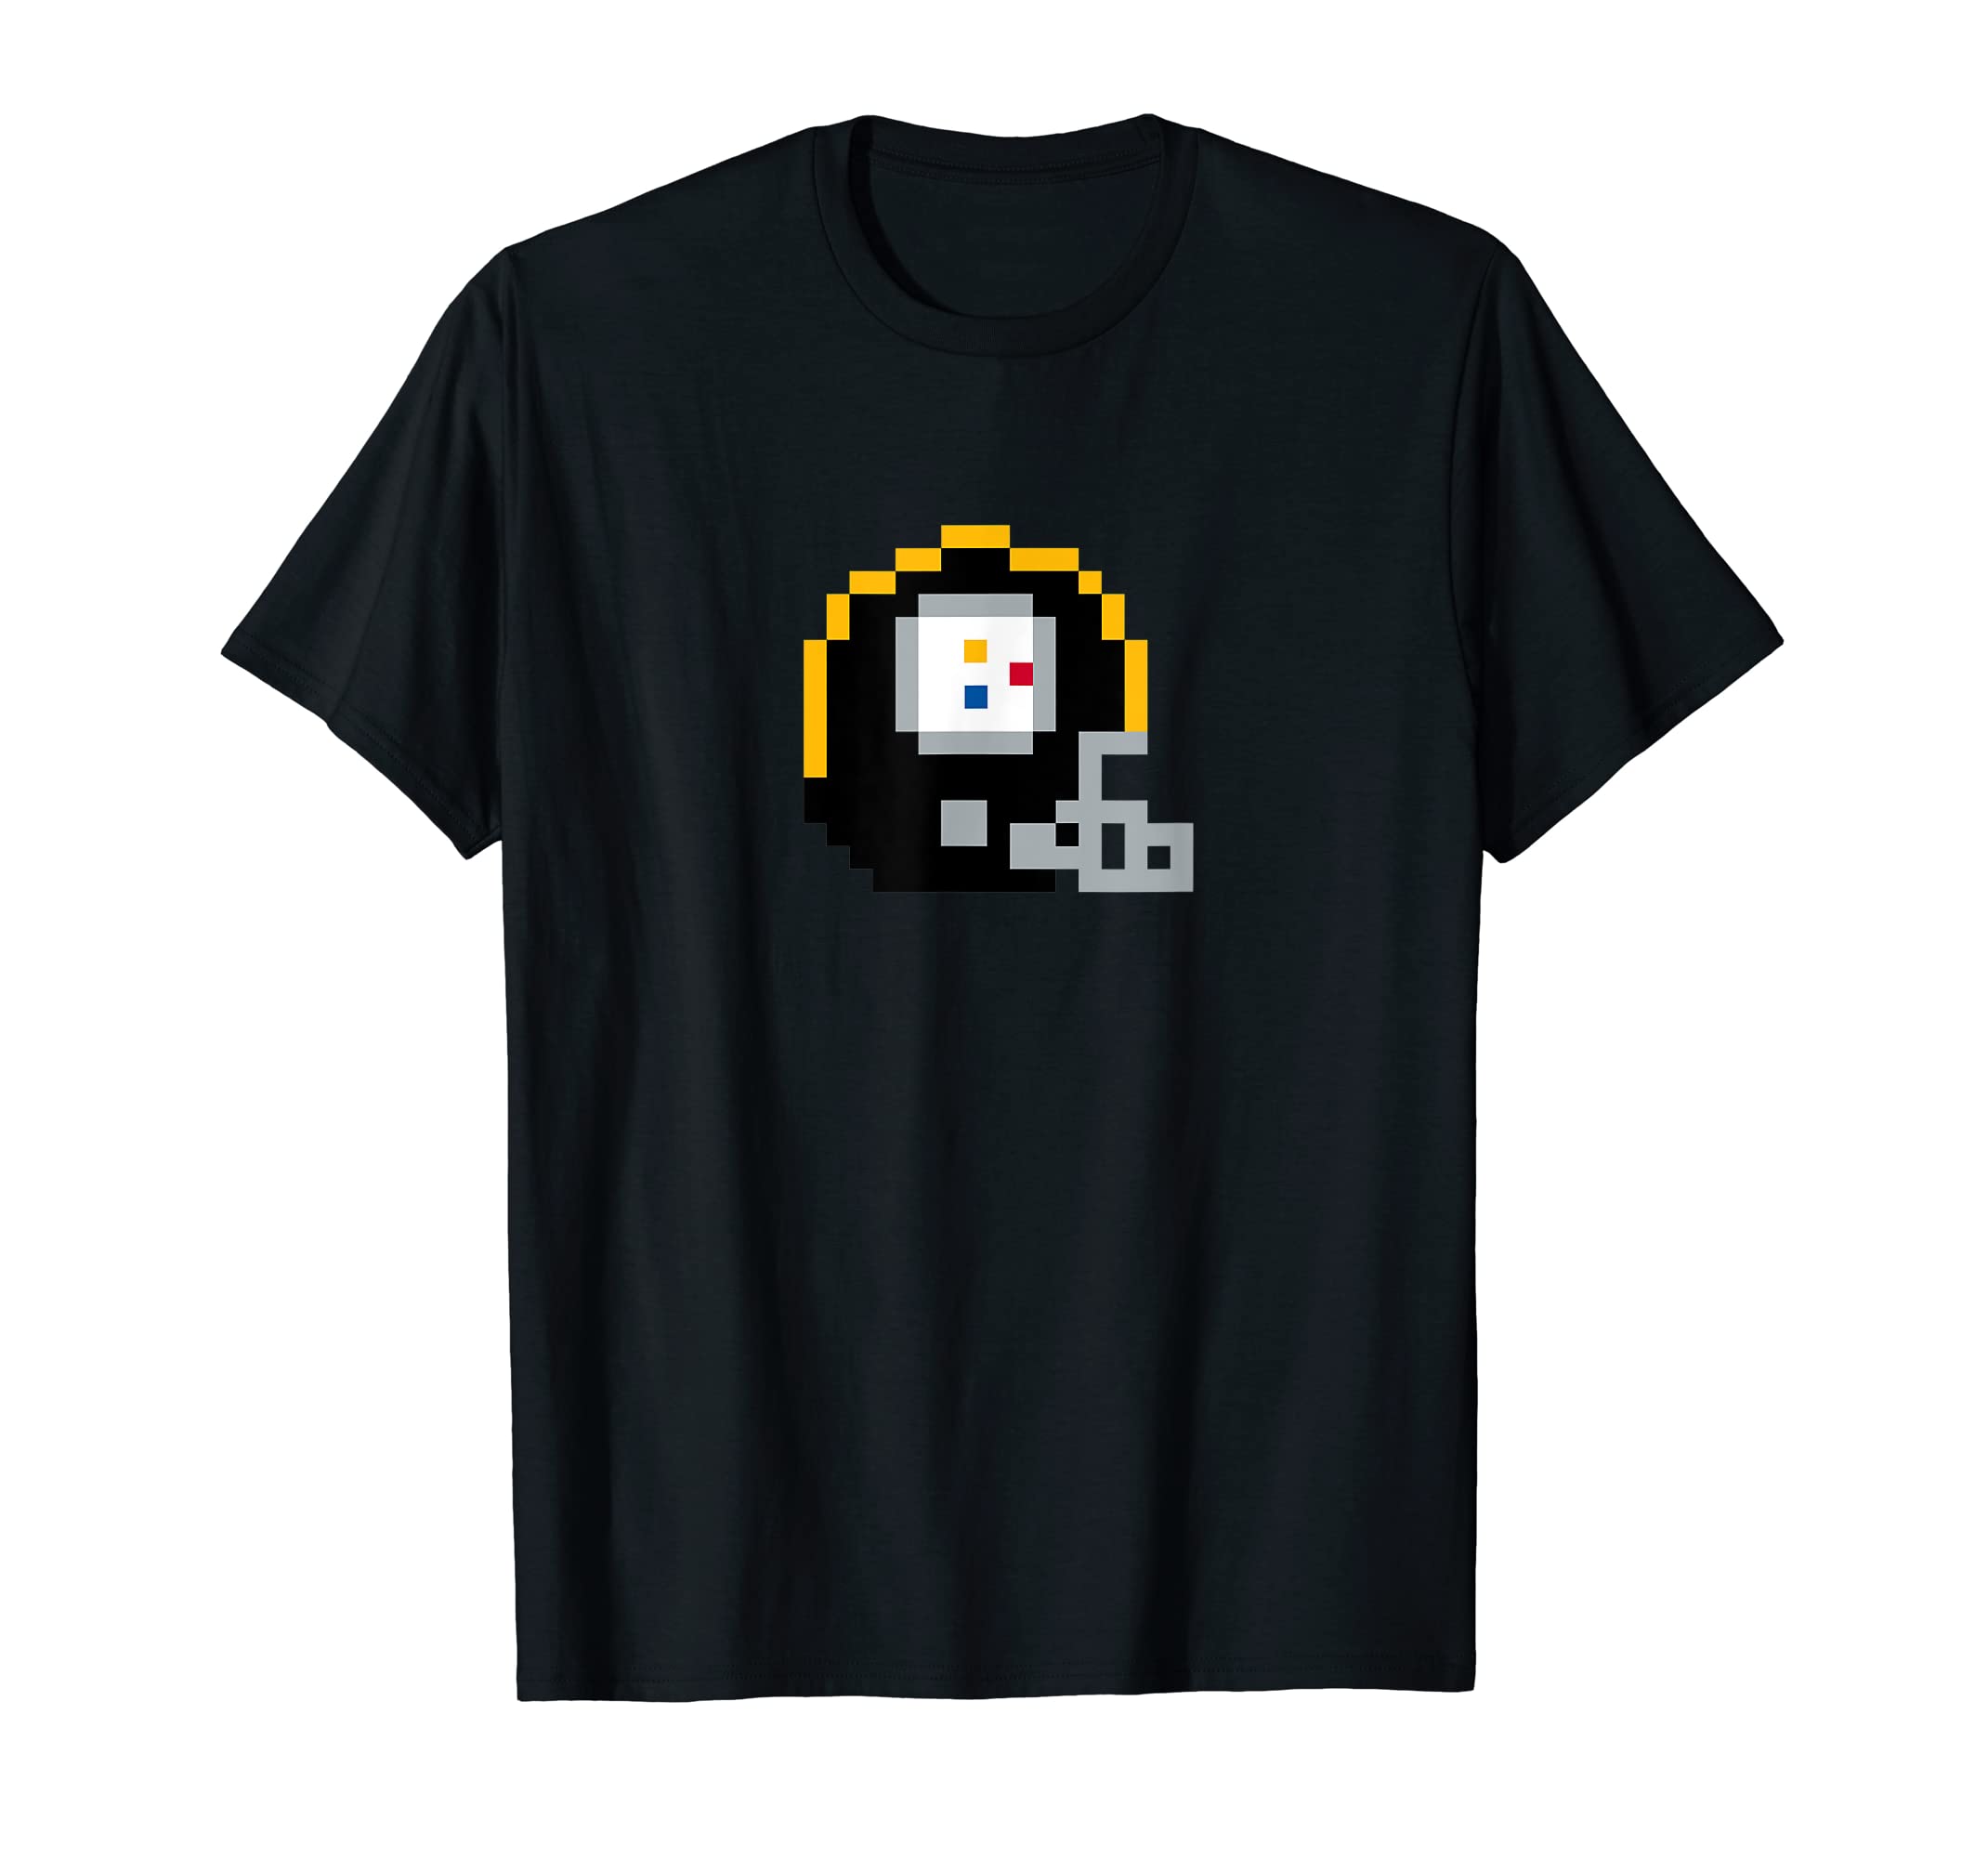 Retro 8-Bit Video Game Pittsburgh Steelers Football Helmet (Shirts & More)